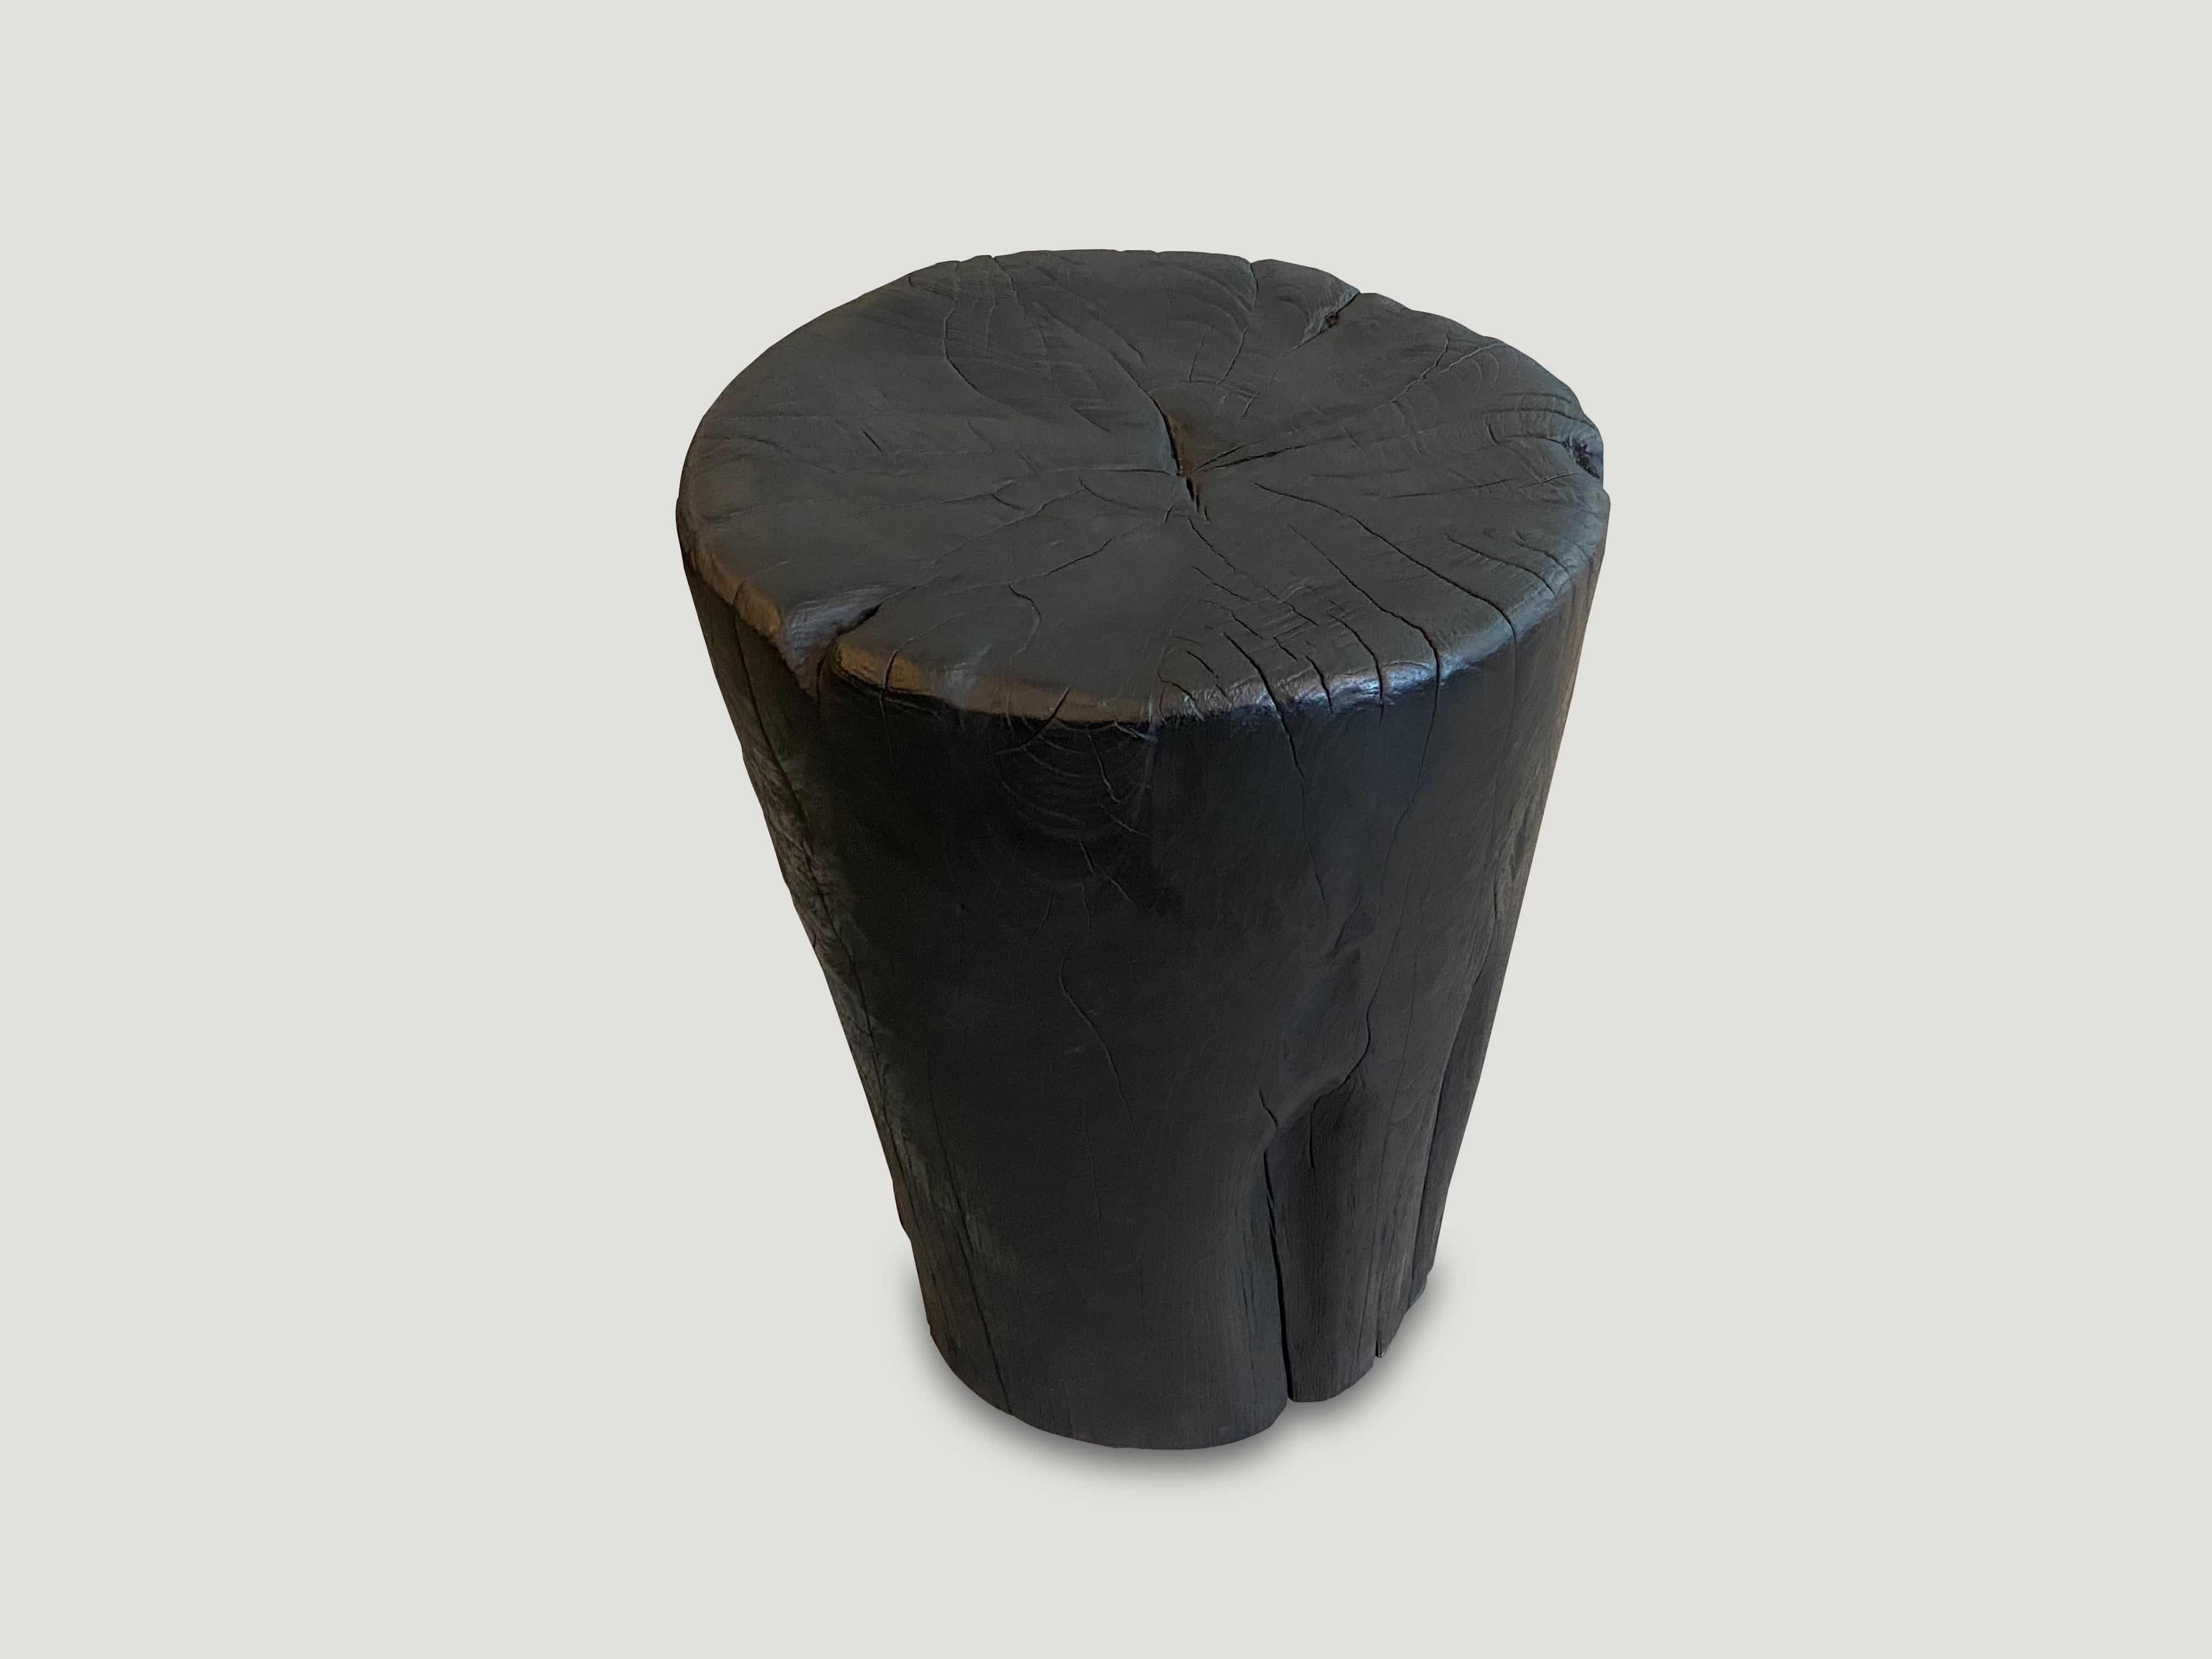 Reclaimed teak wood side table or stool.